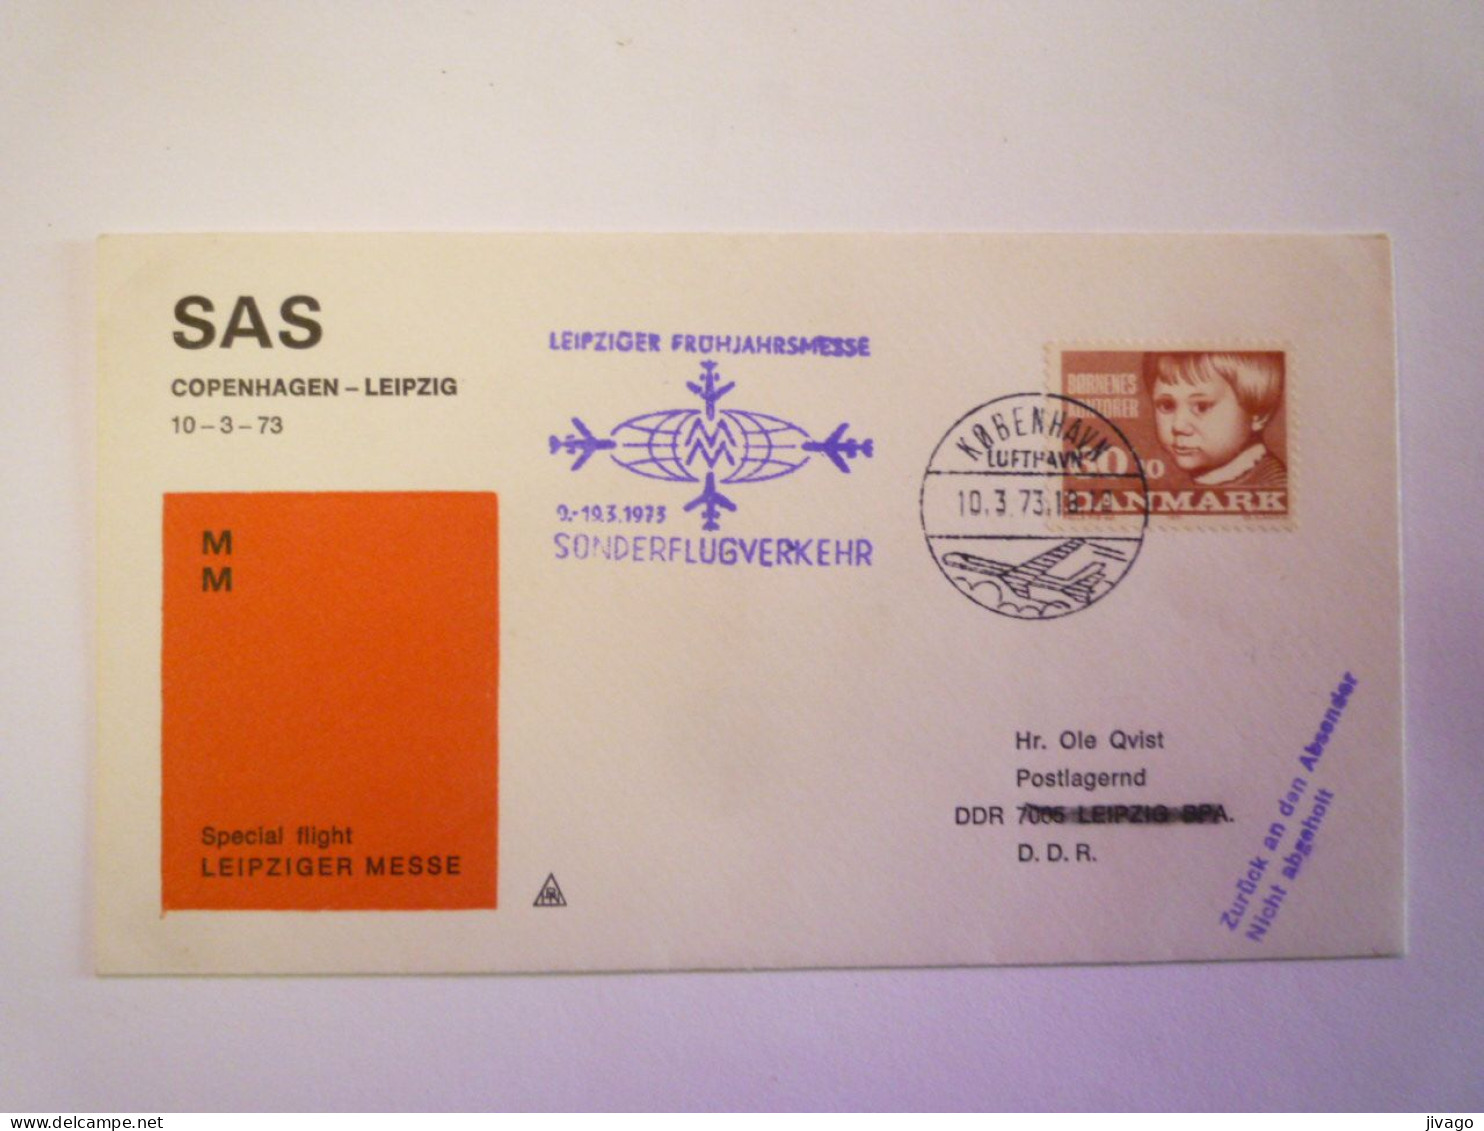 2024 - 609  SAS  COPENHAGEN  -  LEIPZIG  Special Flight  LEIPZIGER MESSE   1973    XXX - Aéreo